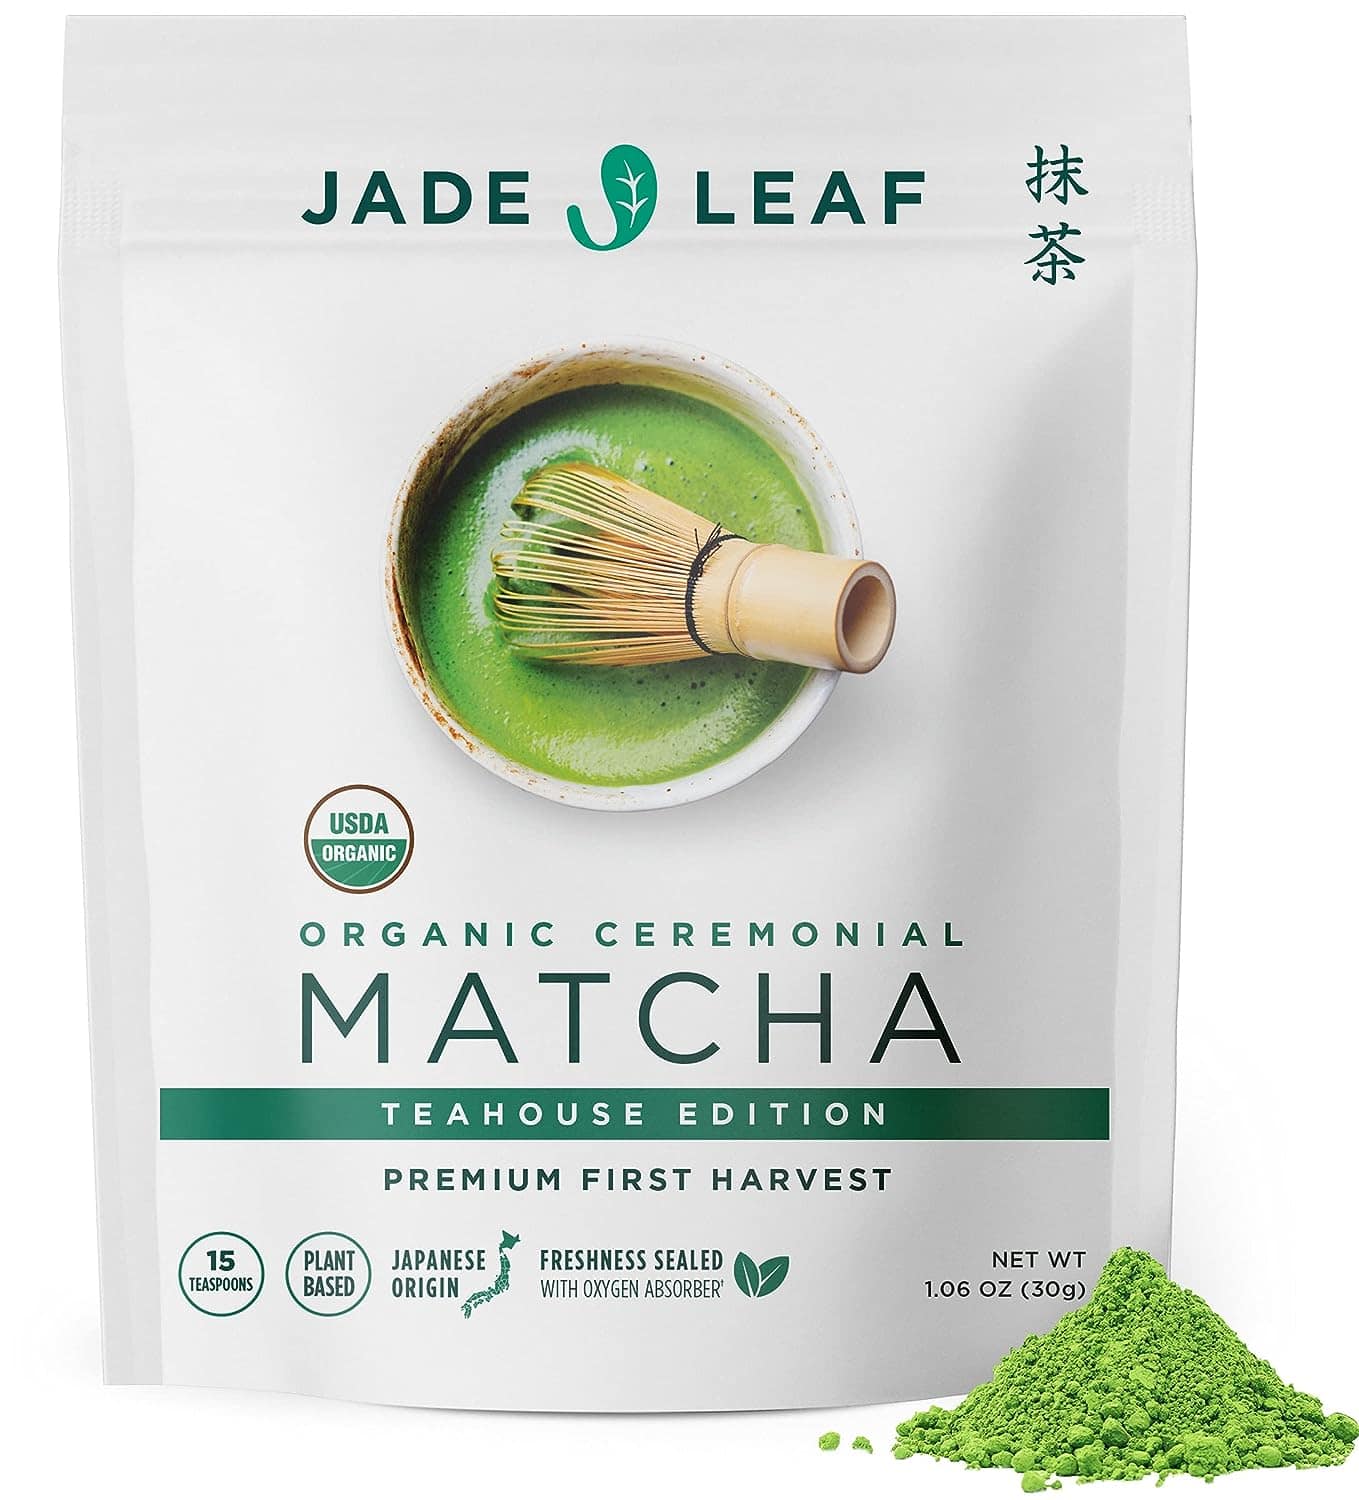 Jade Leaf Matcha Organic Ceremonial Green Tea Powder